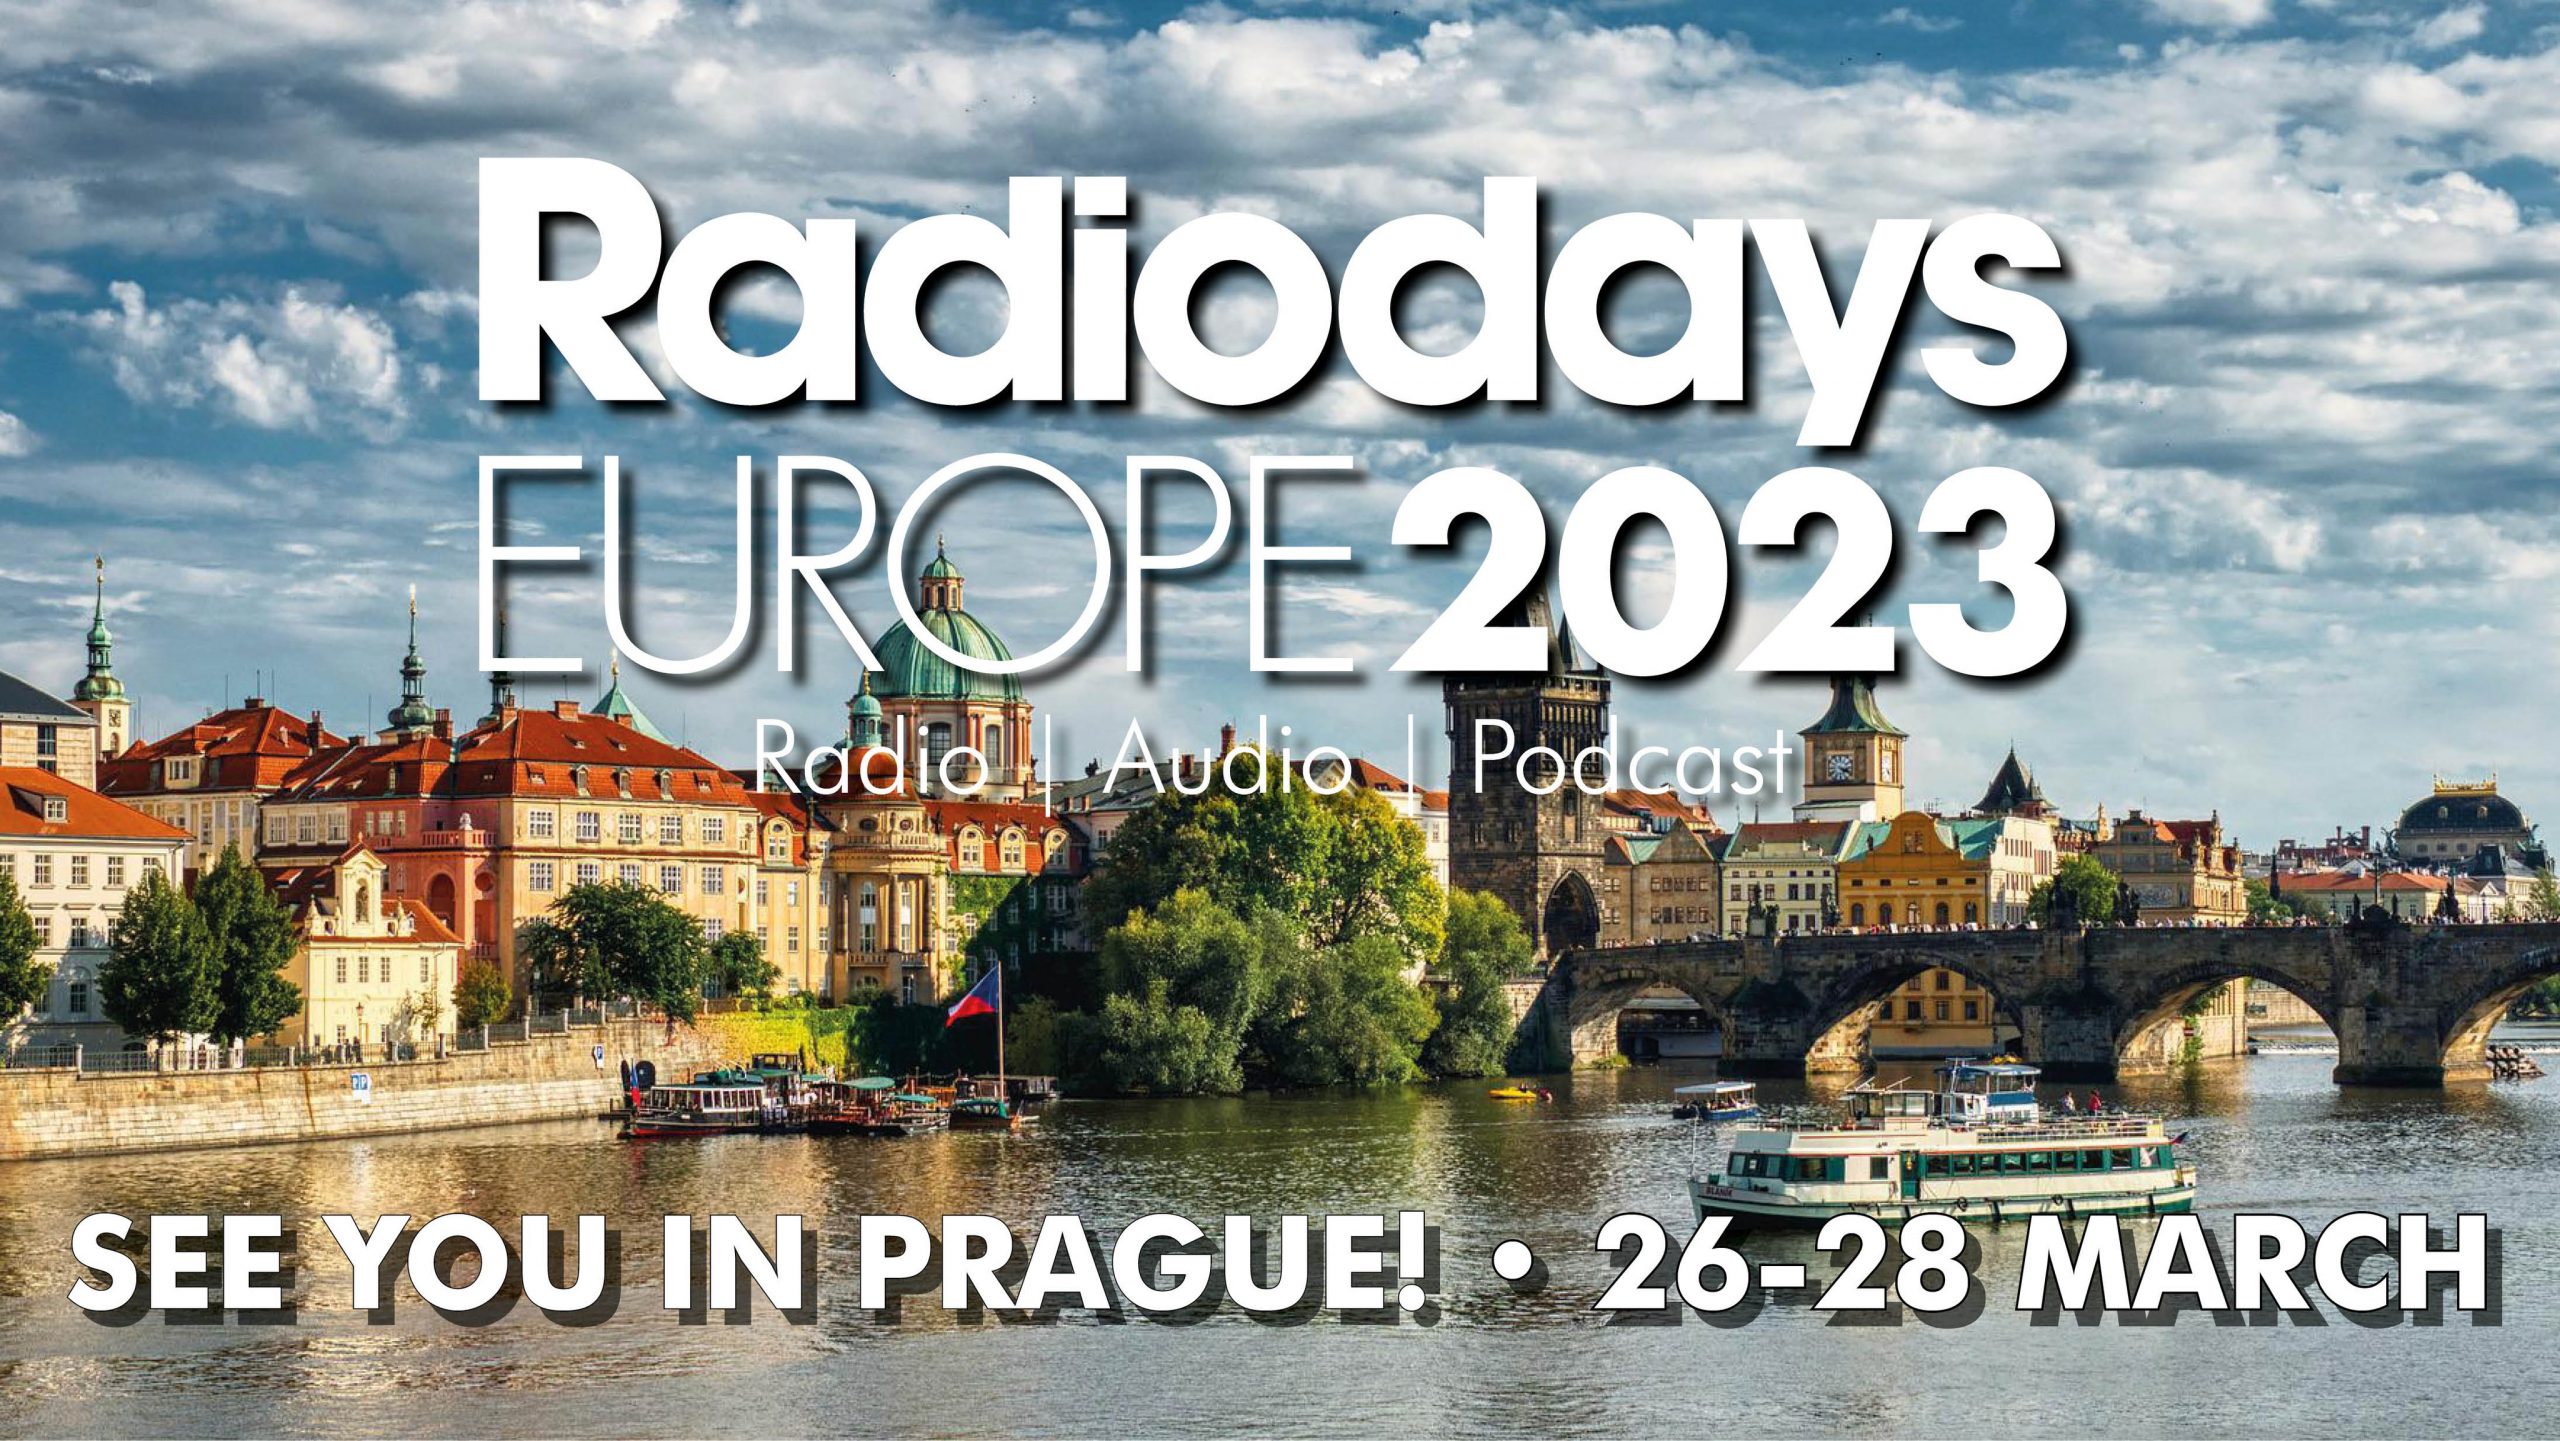 Radiodays Europe 2023. Credit: Radiodays.